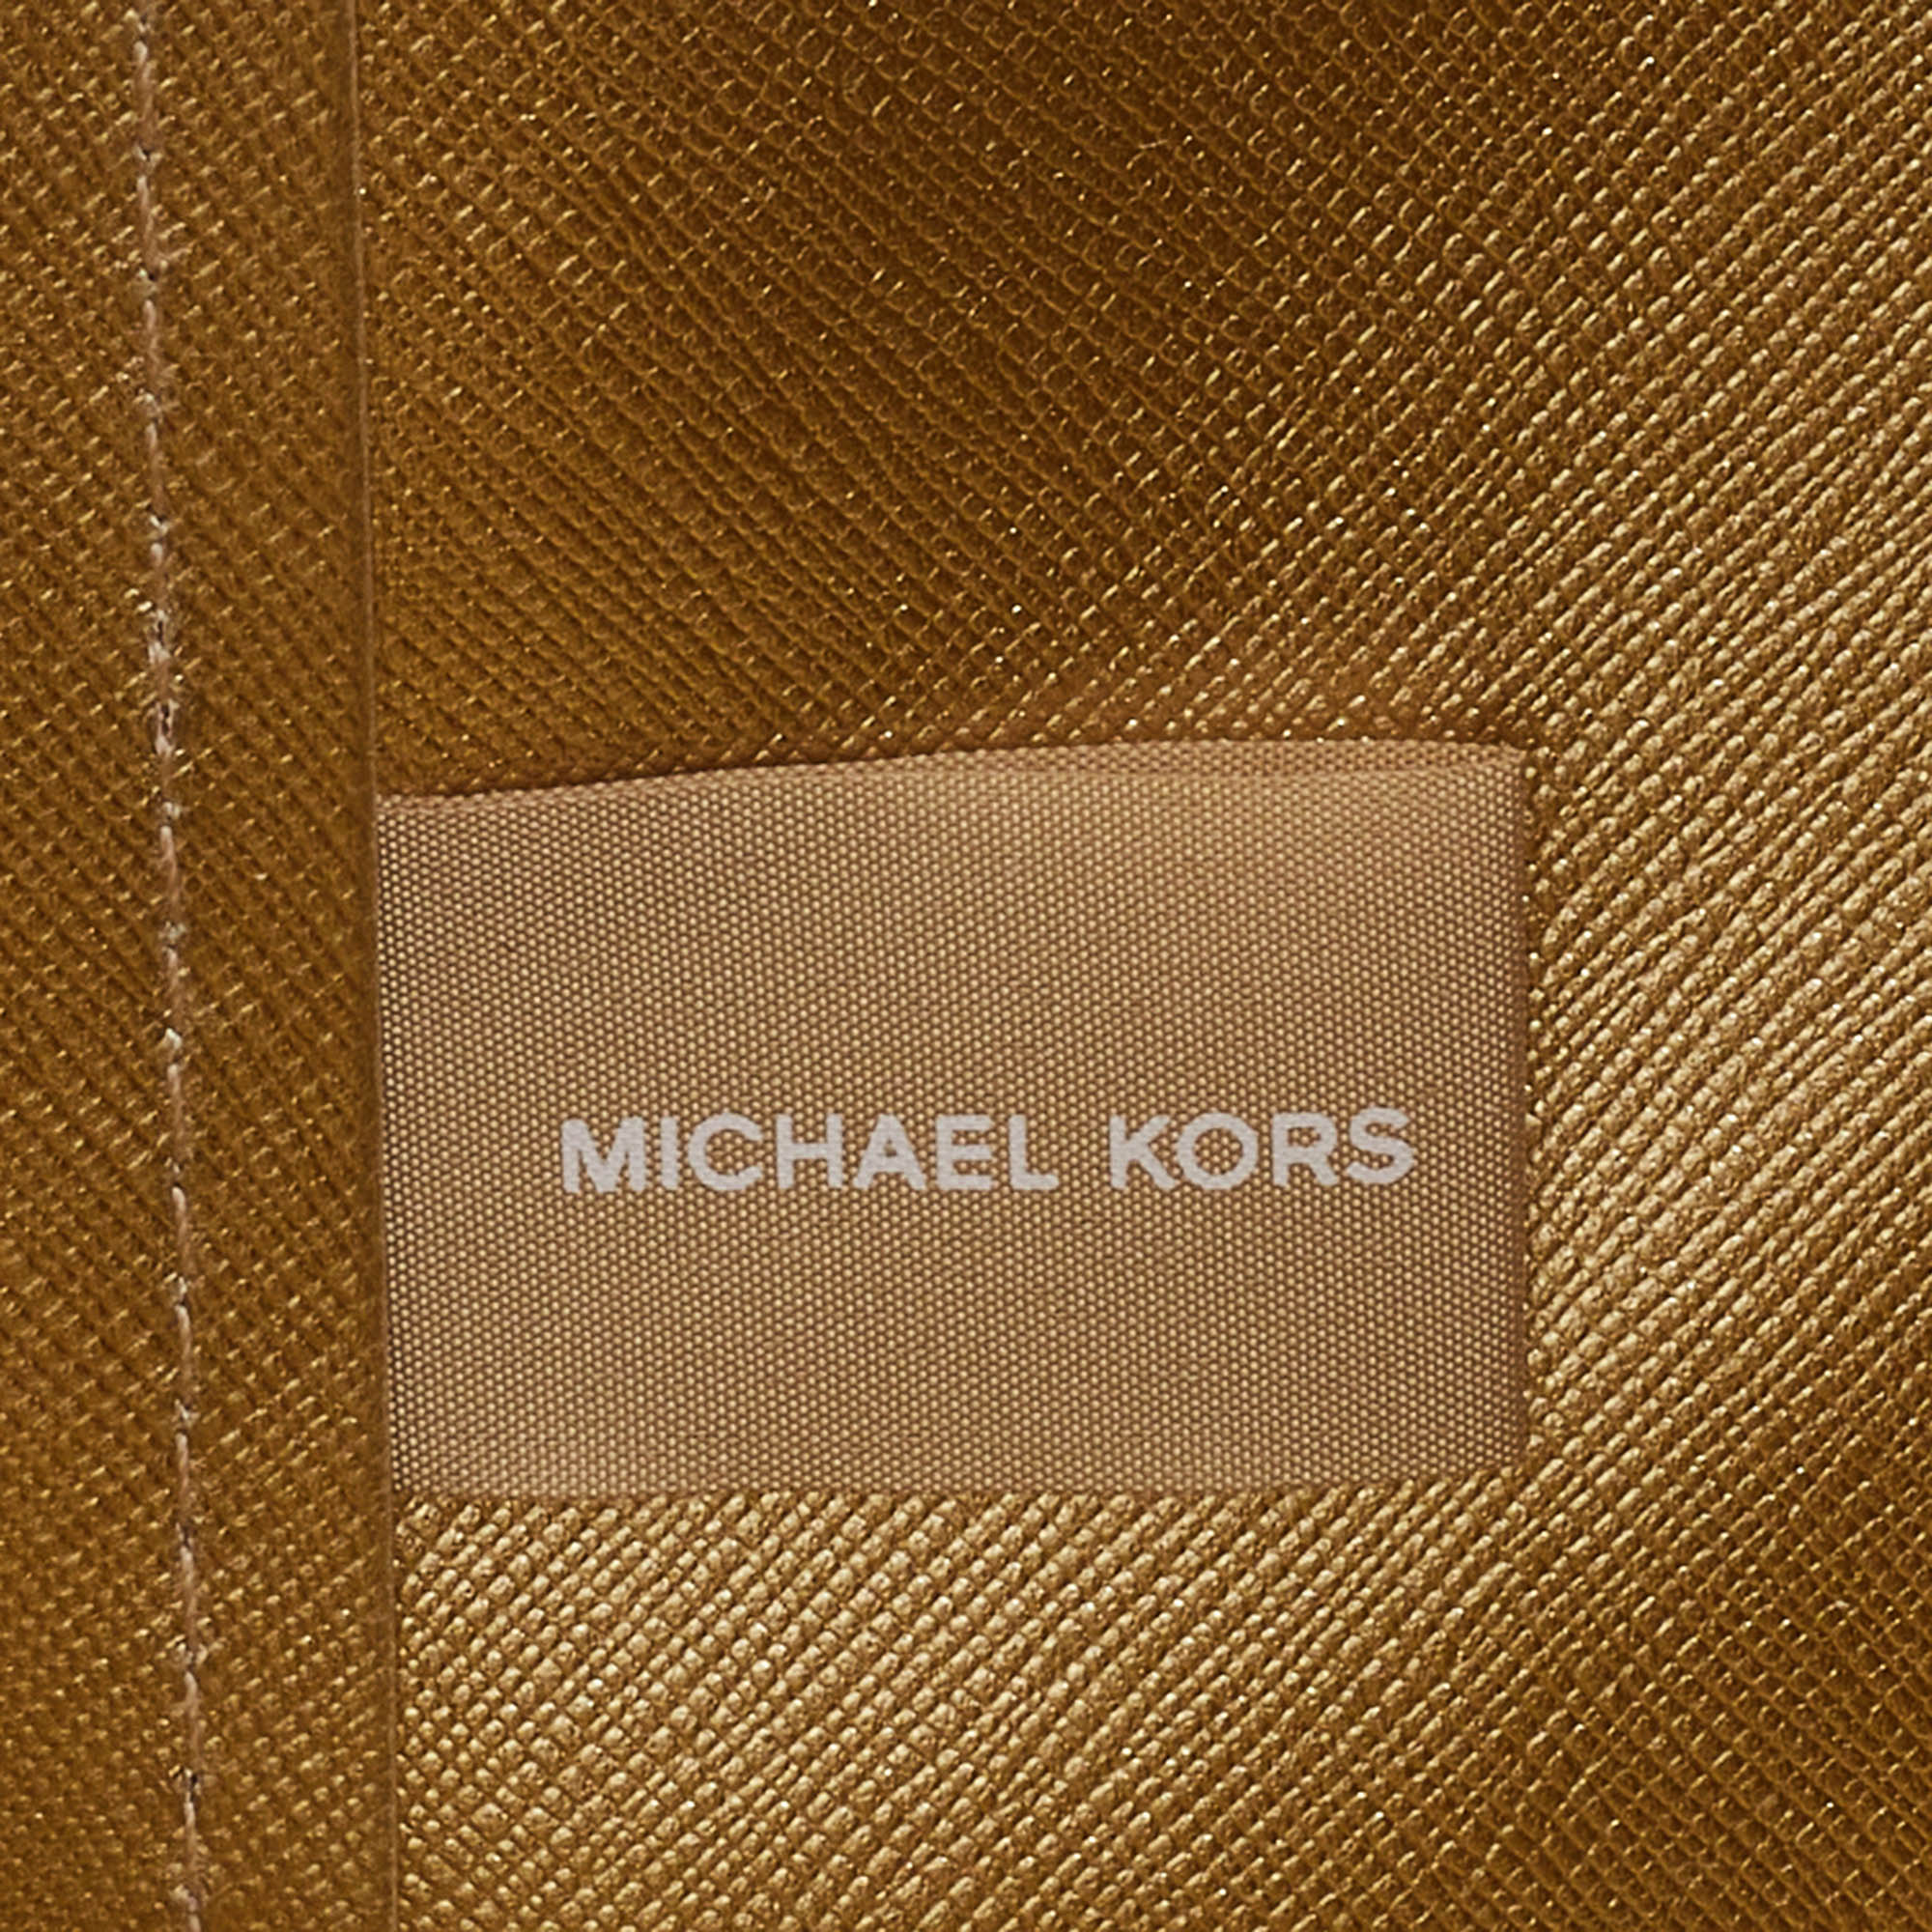 Michael Kors Rose Gold Leather Tassel Shopper Tote